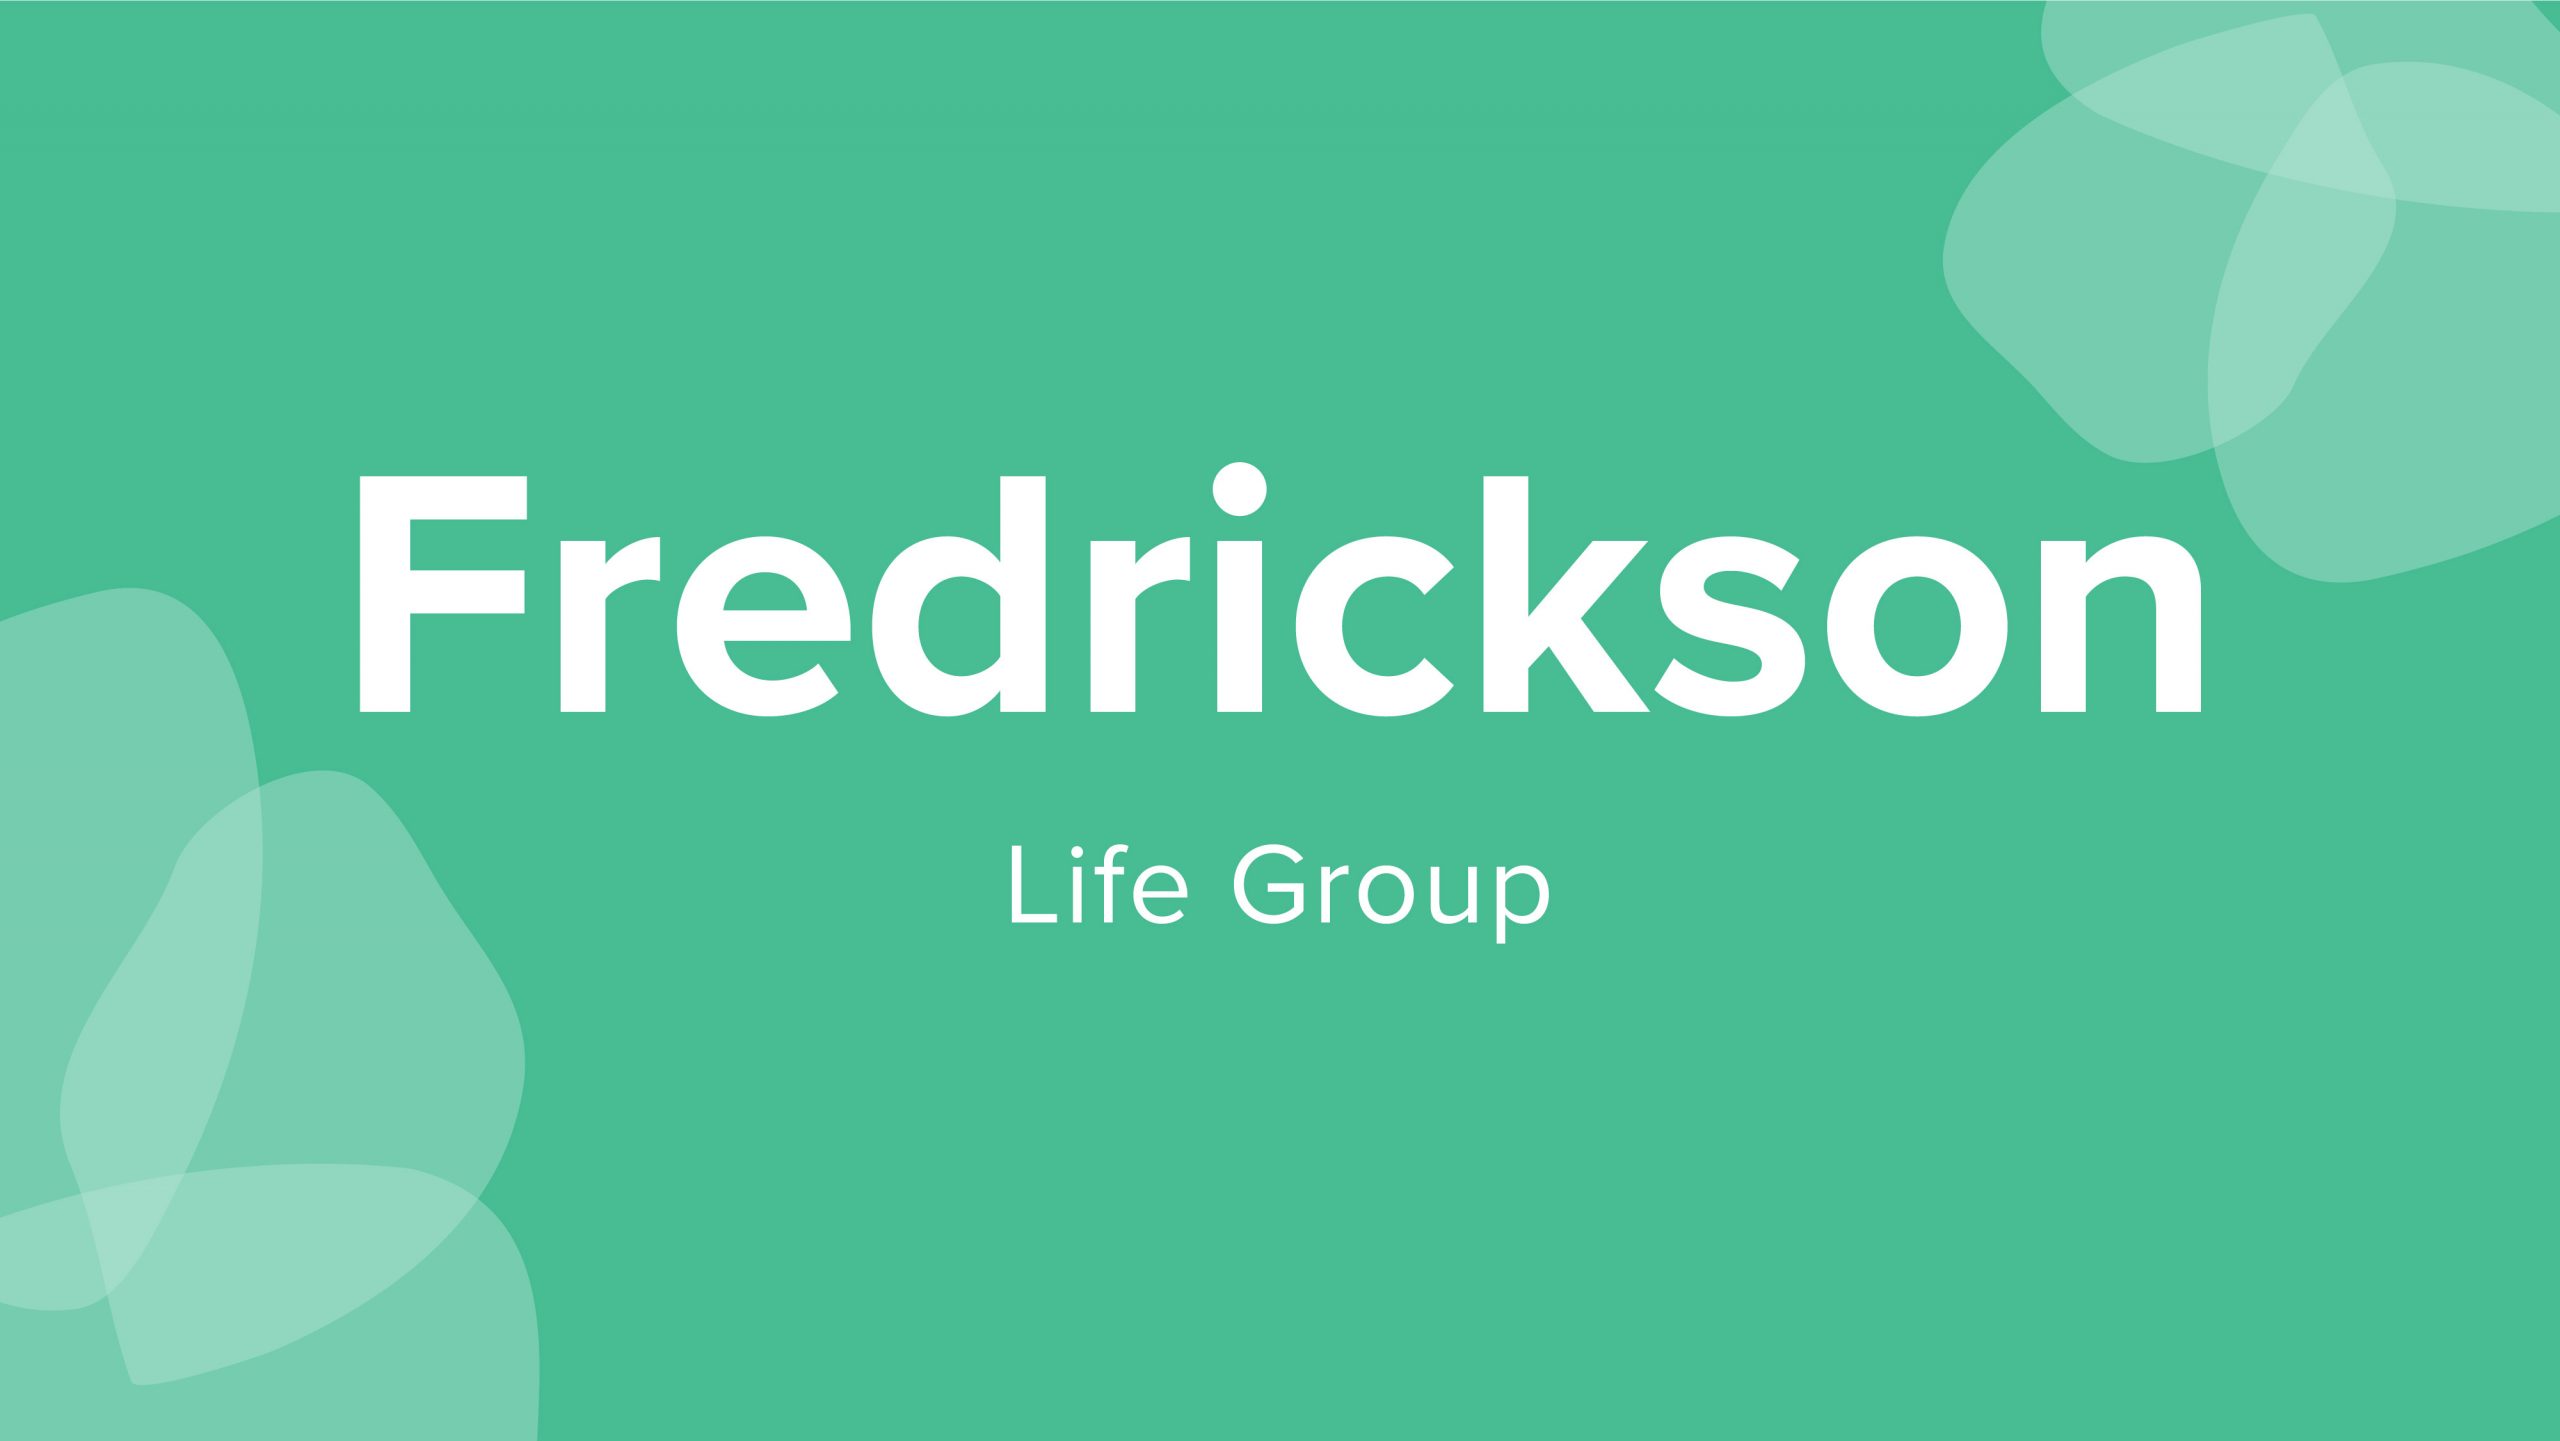 Fredrickson Life Group